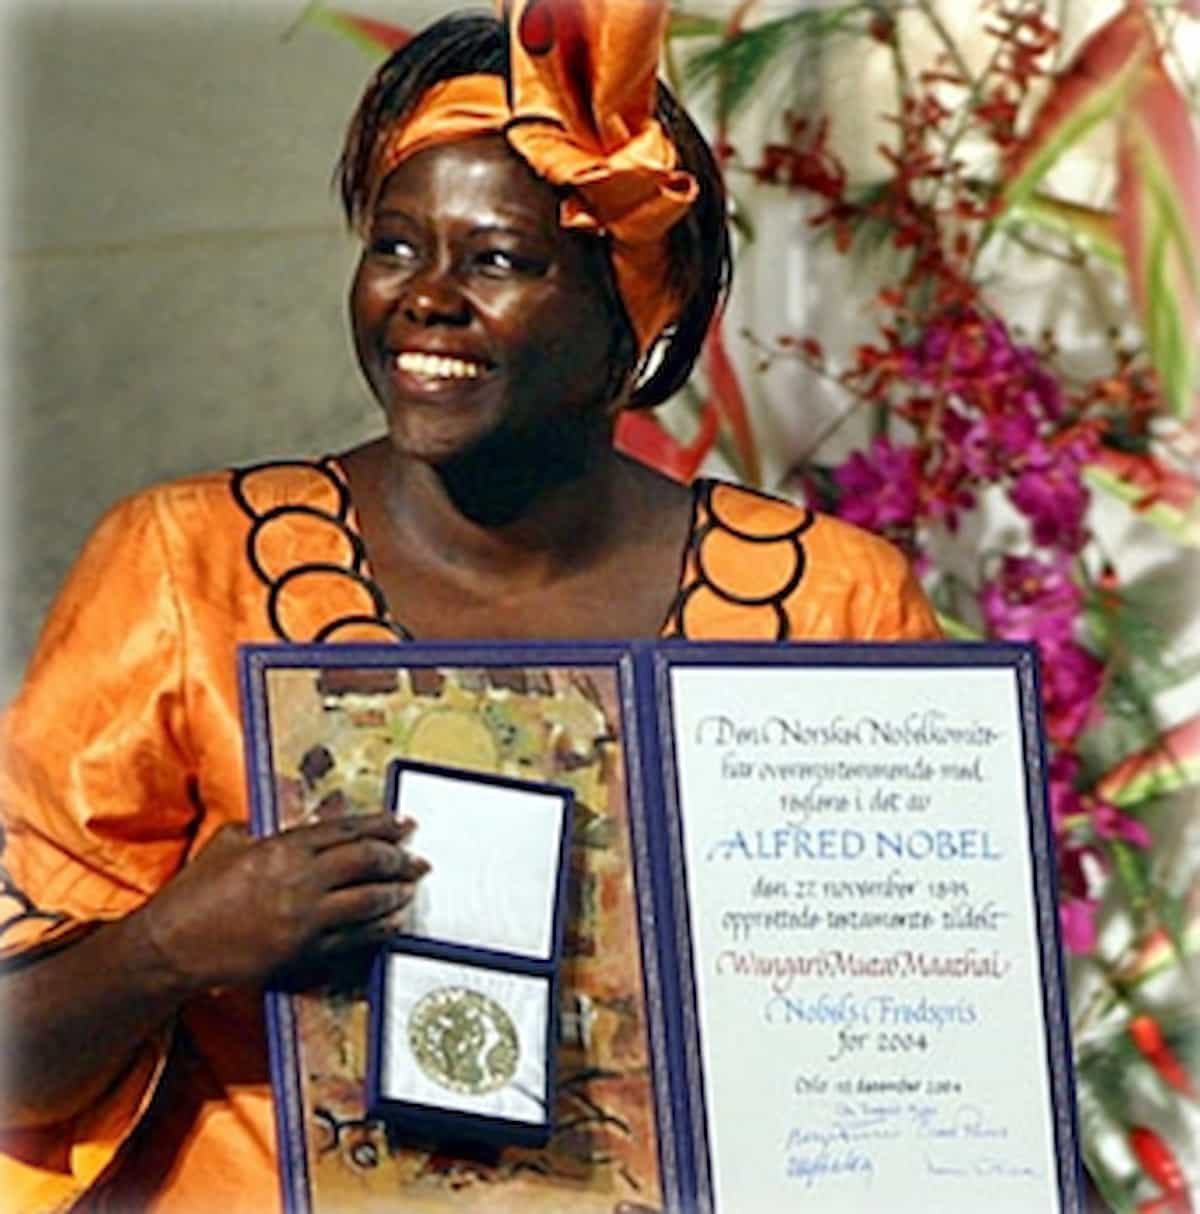 spotcovery-wangari-maathai-receives-the-nobel-peace-prize-african-women-nobel-peace-prize-winners-3-women-laureates